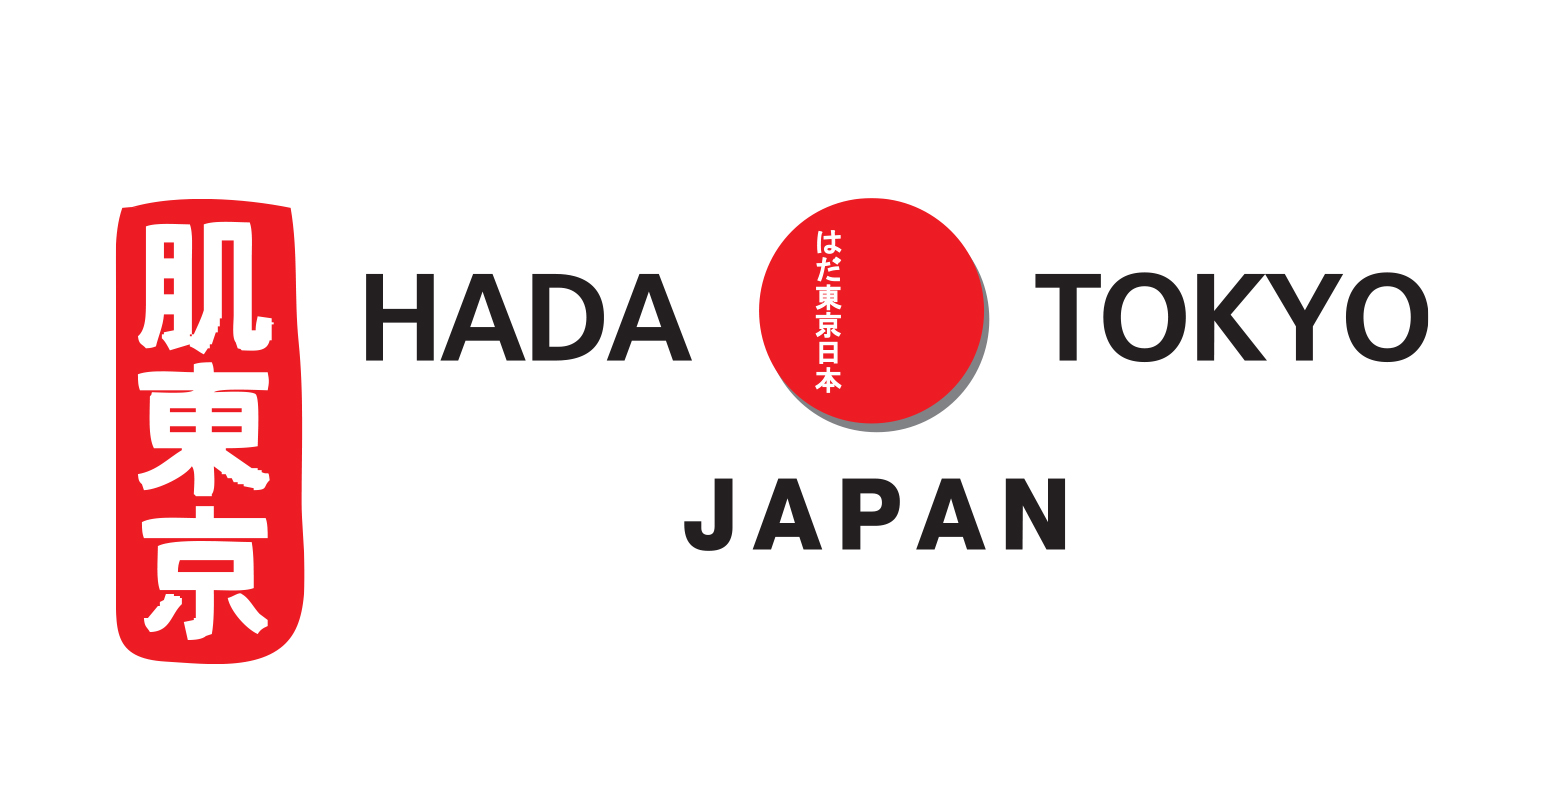 Hada Tokyo Japan